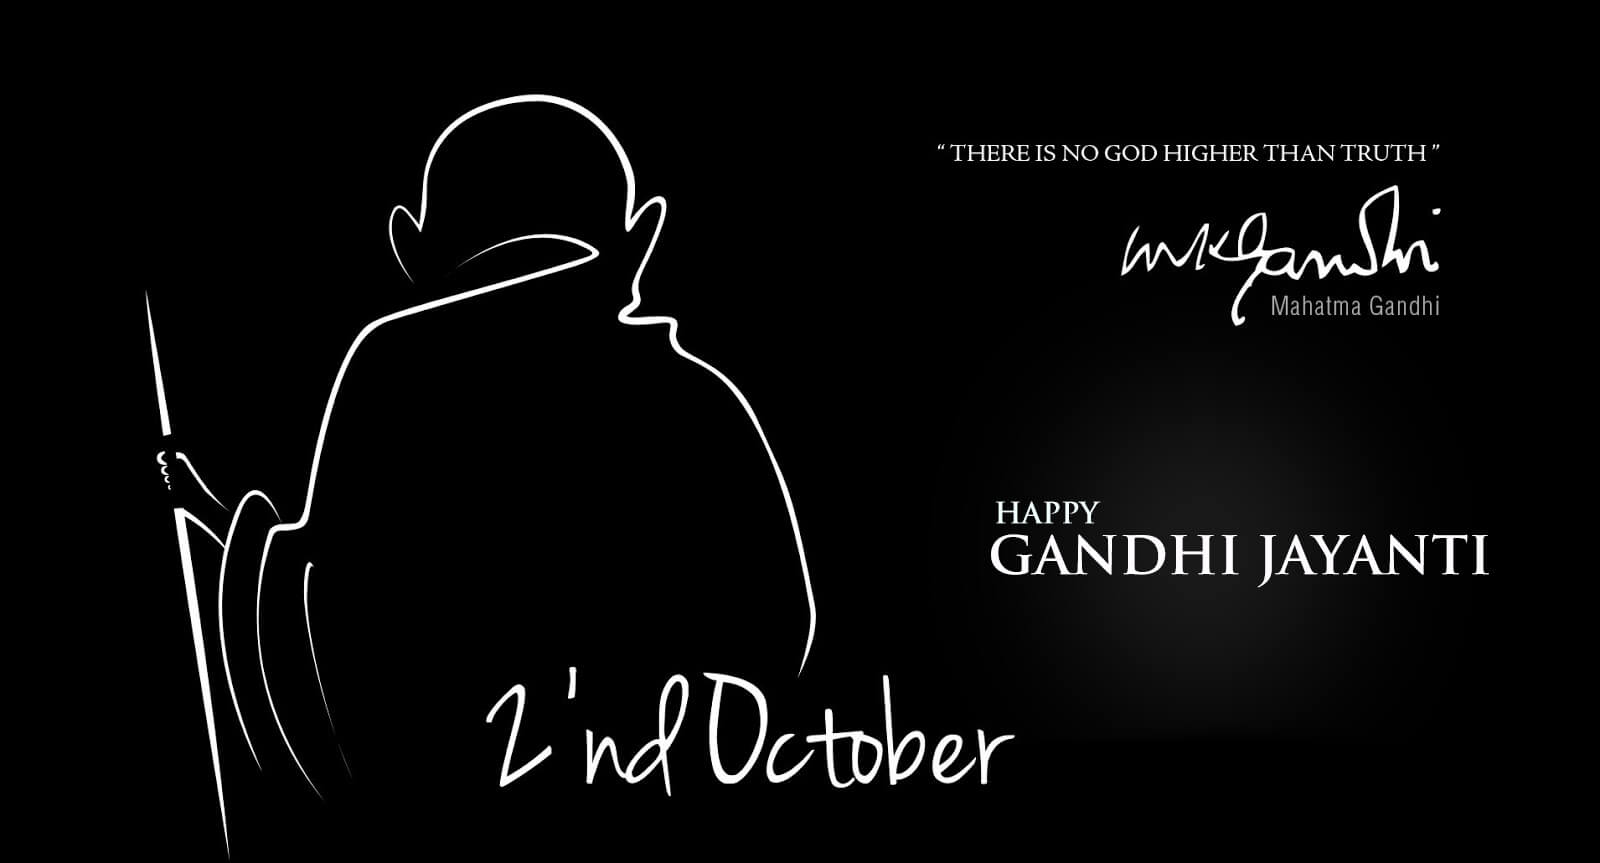 Gandhi Jayanti Quotes October 2 HD Image Wallpaper